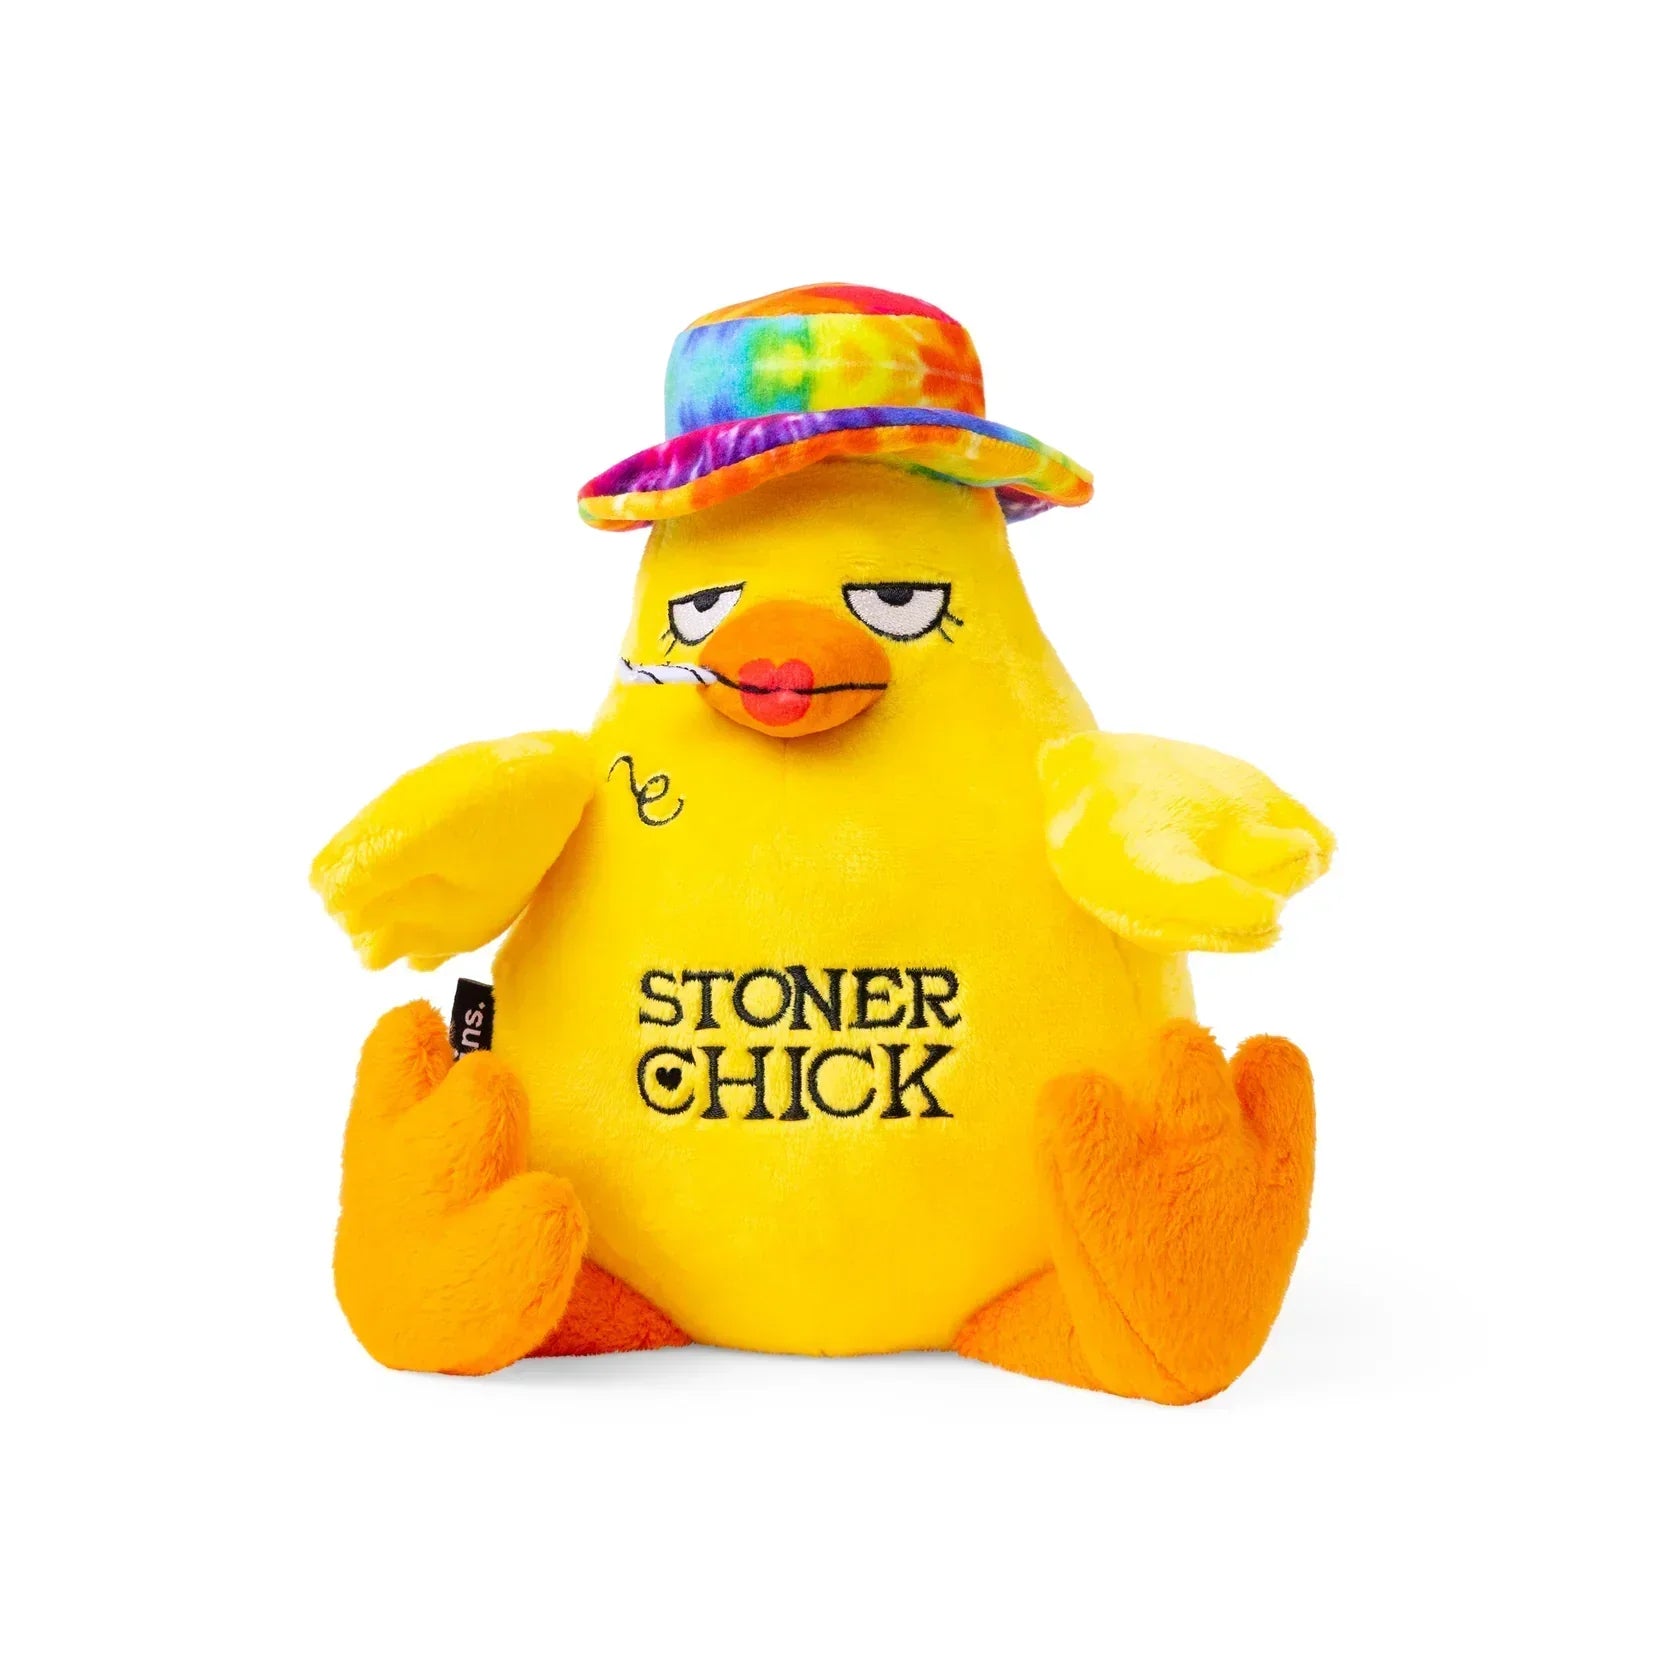 "Stoner Chick" Plush Chick The Plush Kingdom